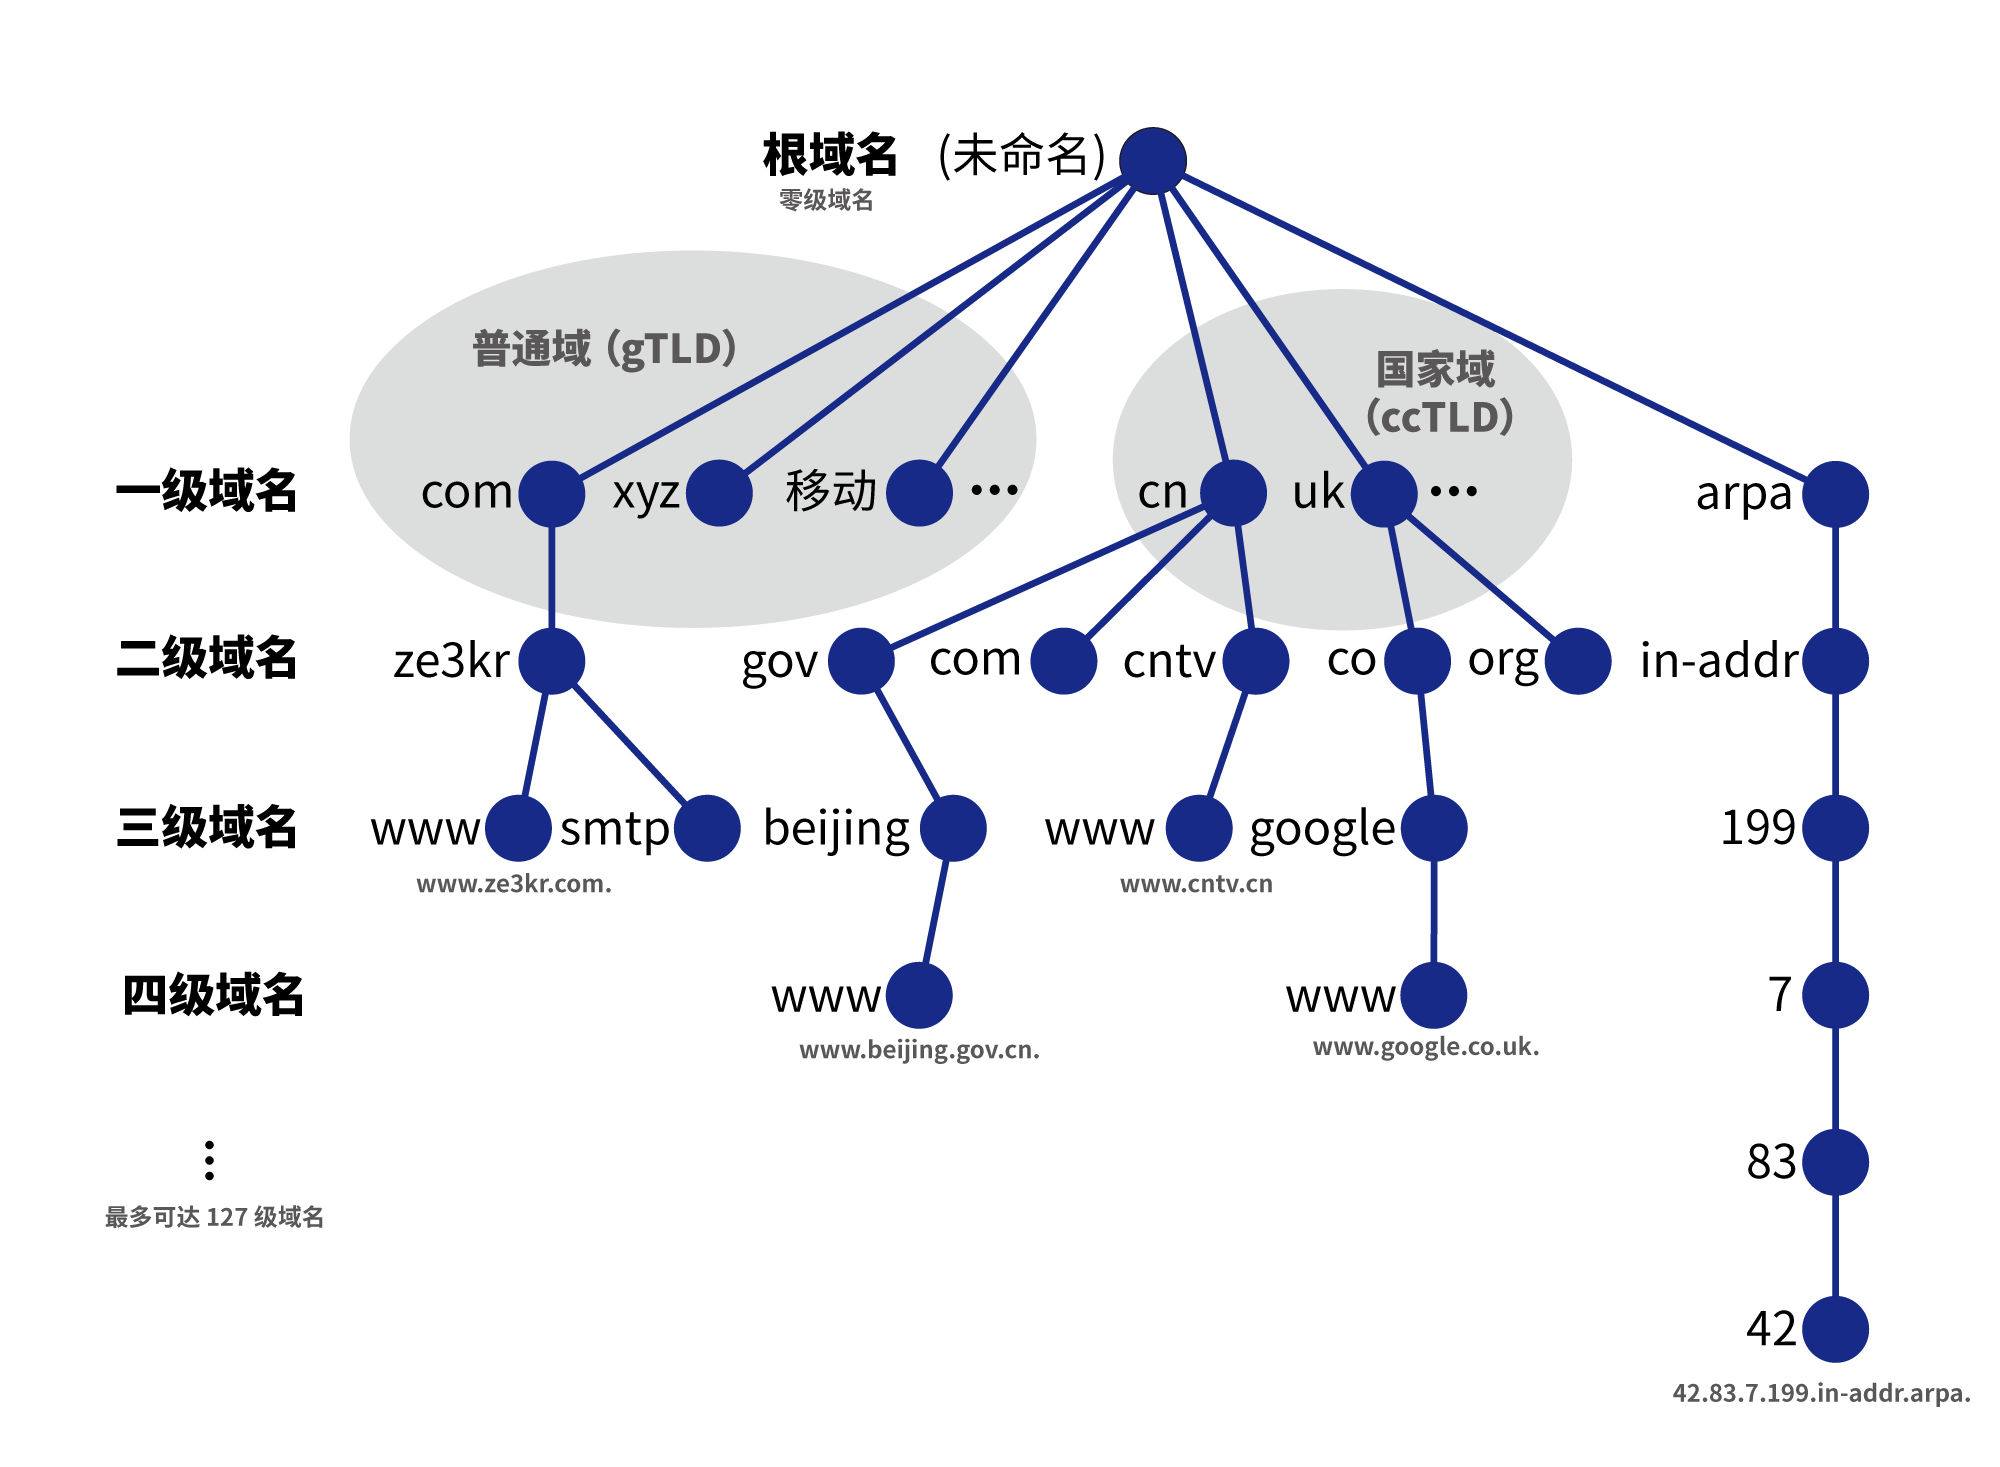 Global DNS topology map